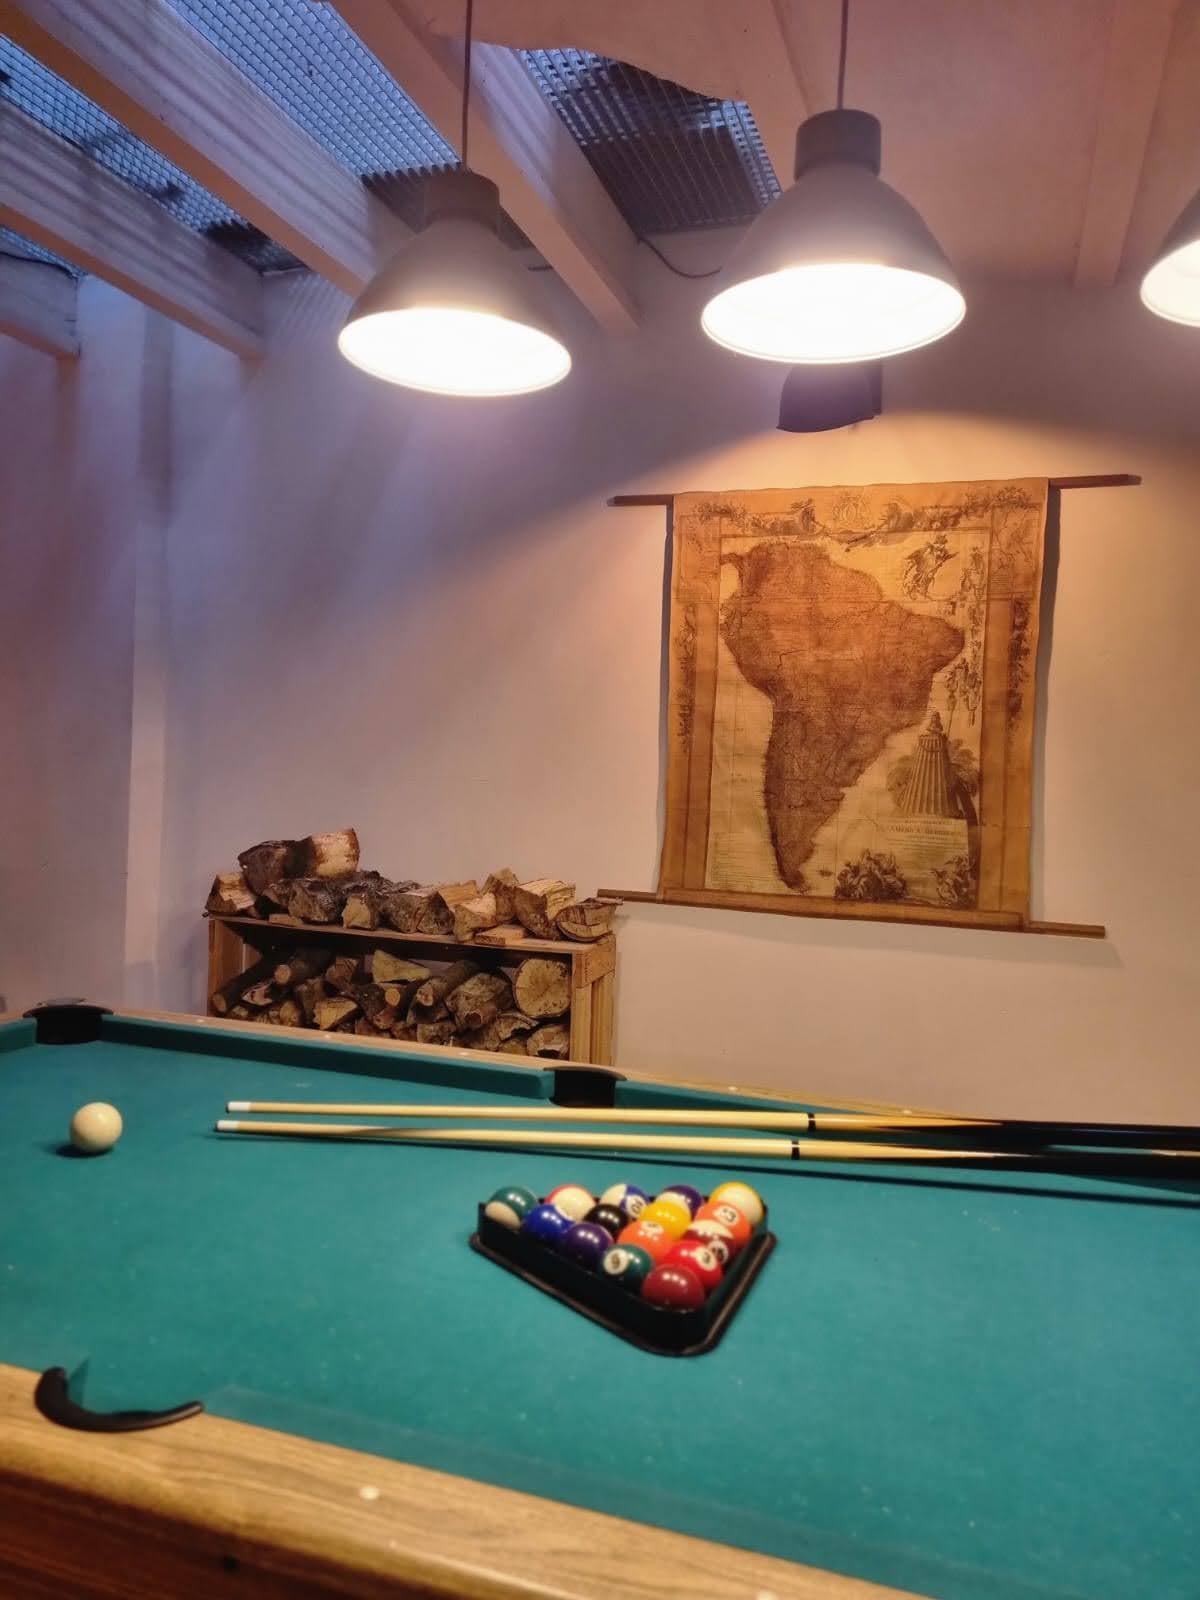 Driekoningen - Apartment for rent in Berchem, Antwerp billiard table